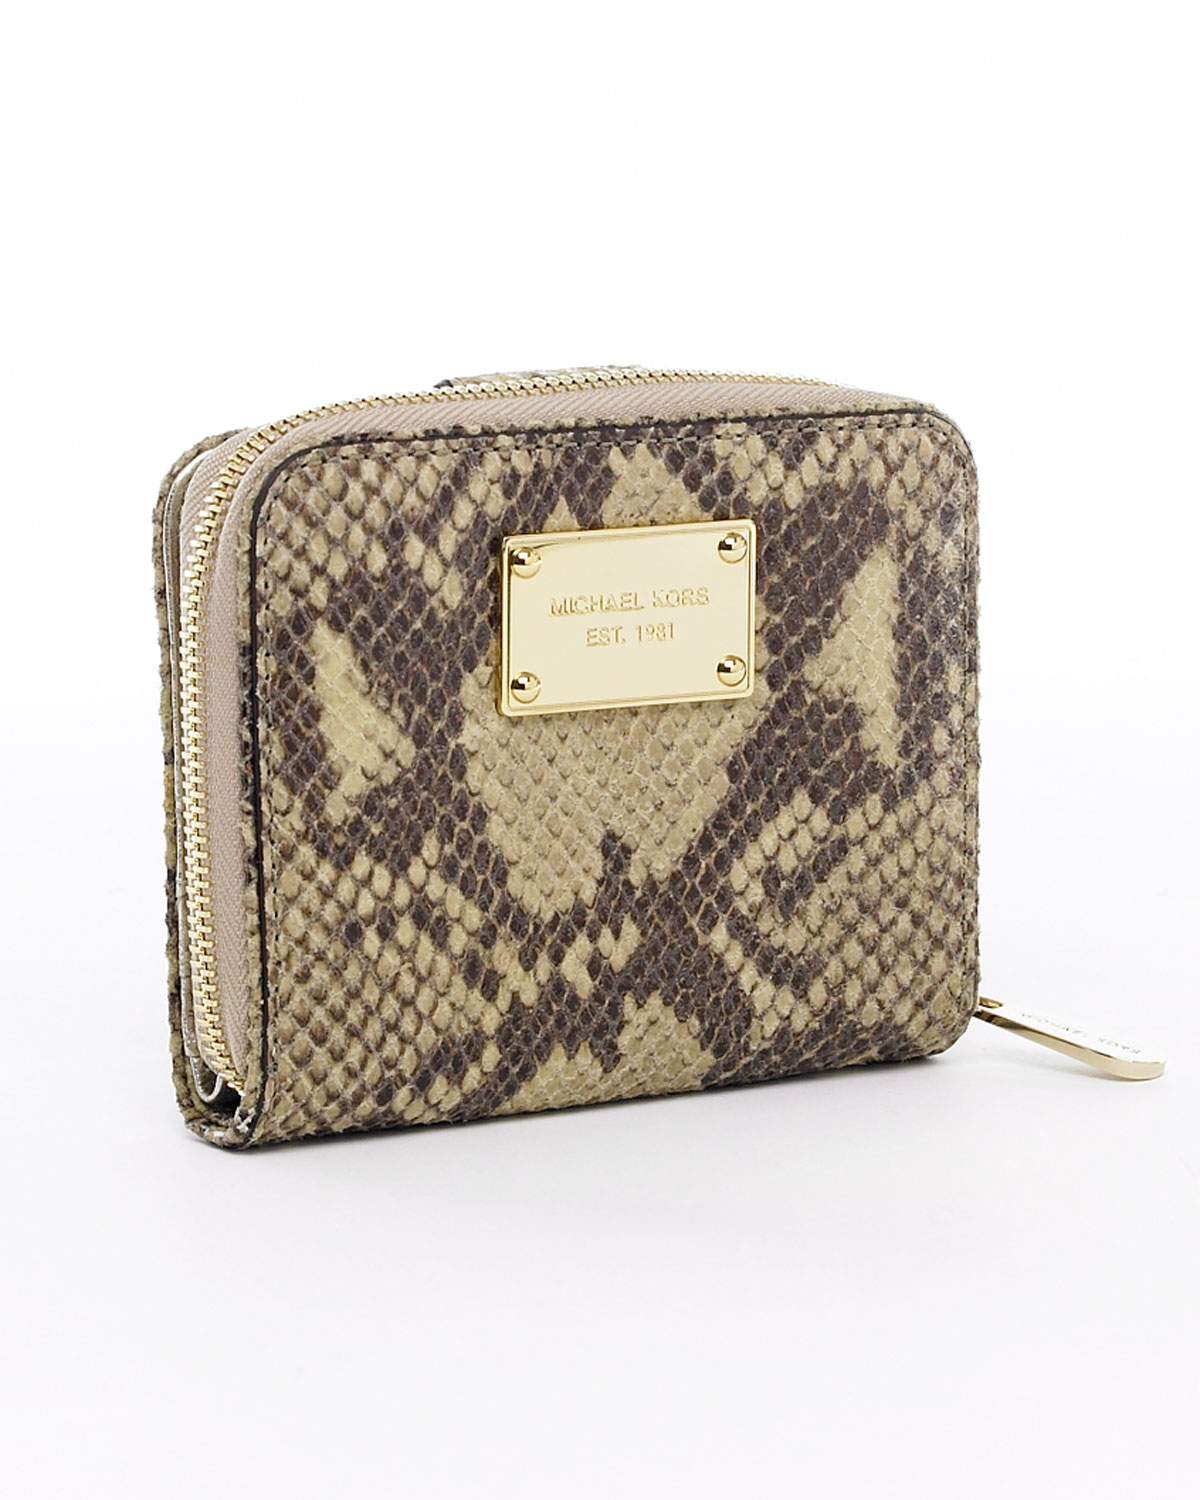 MK snakeskin wallet